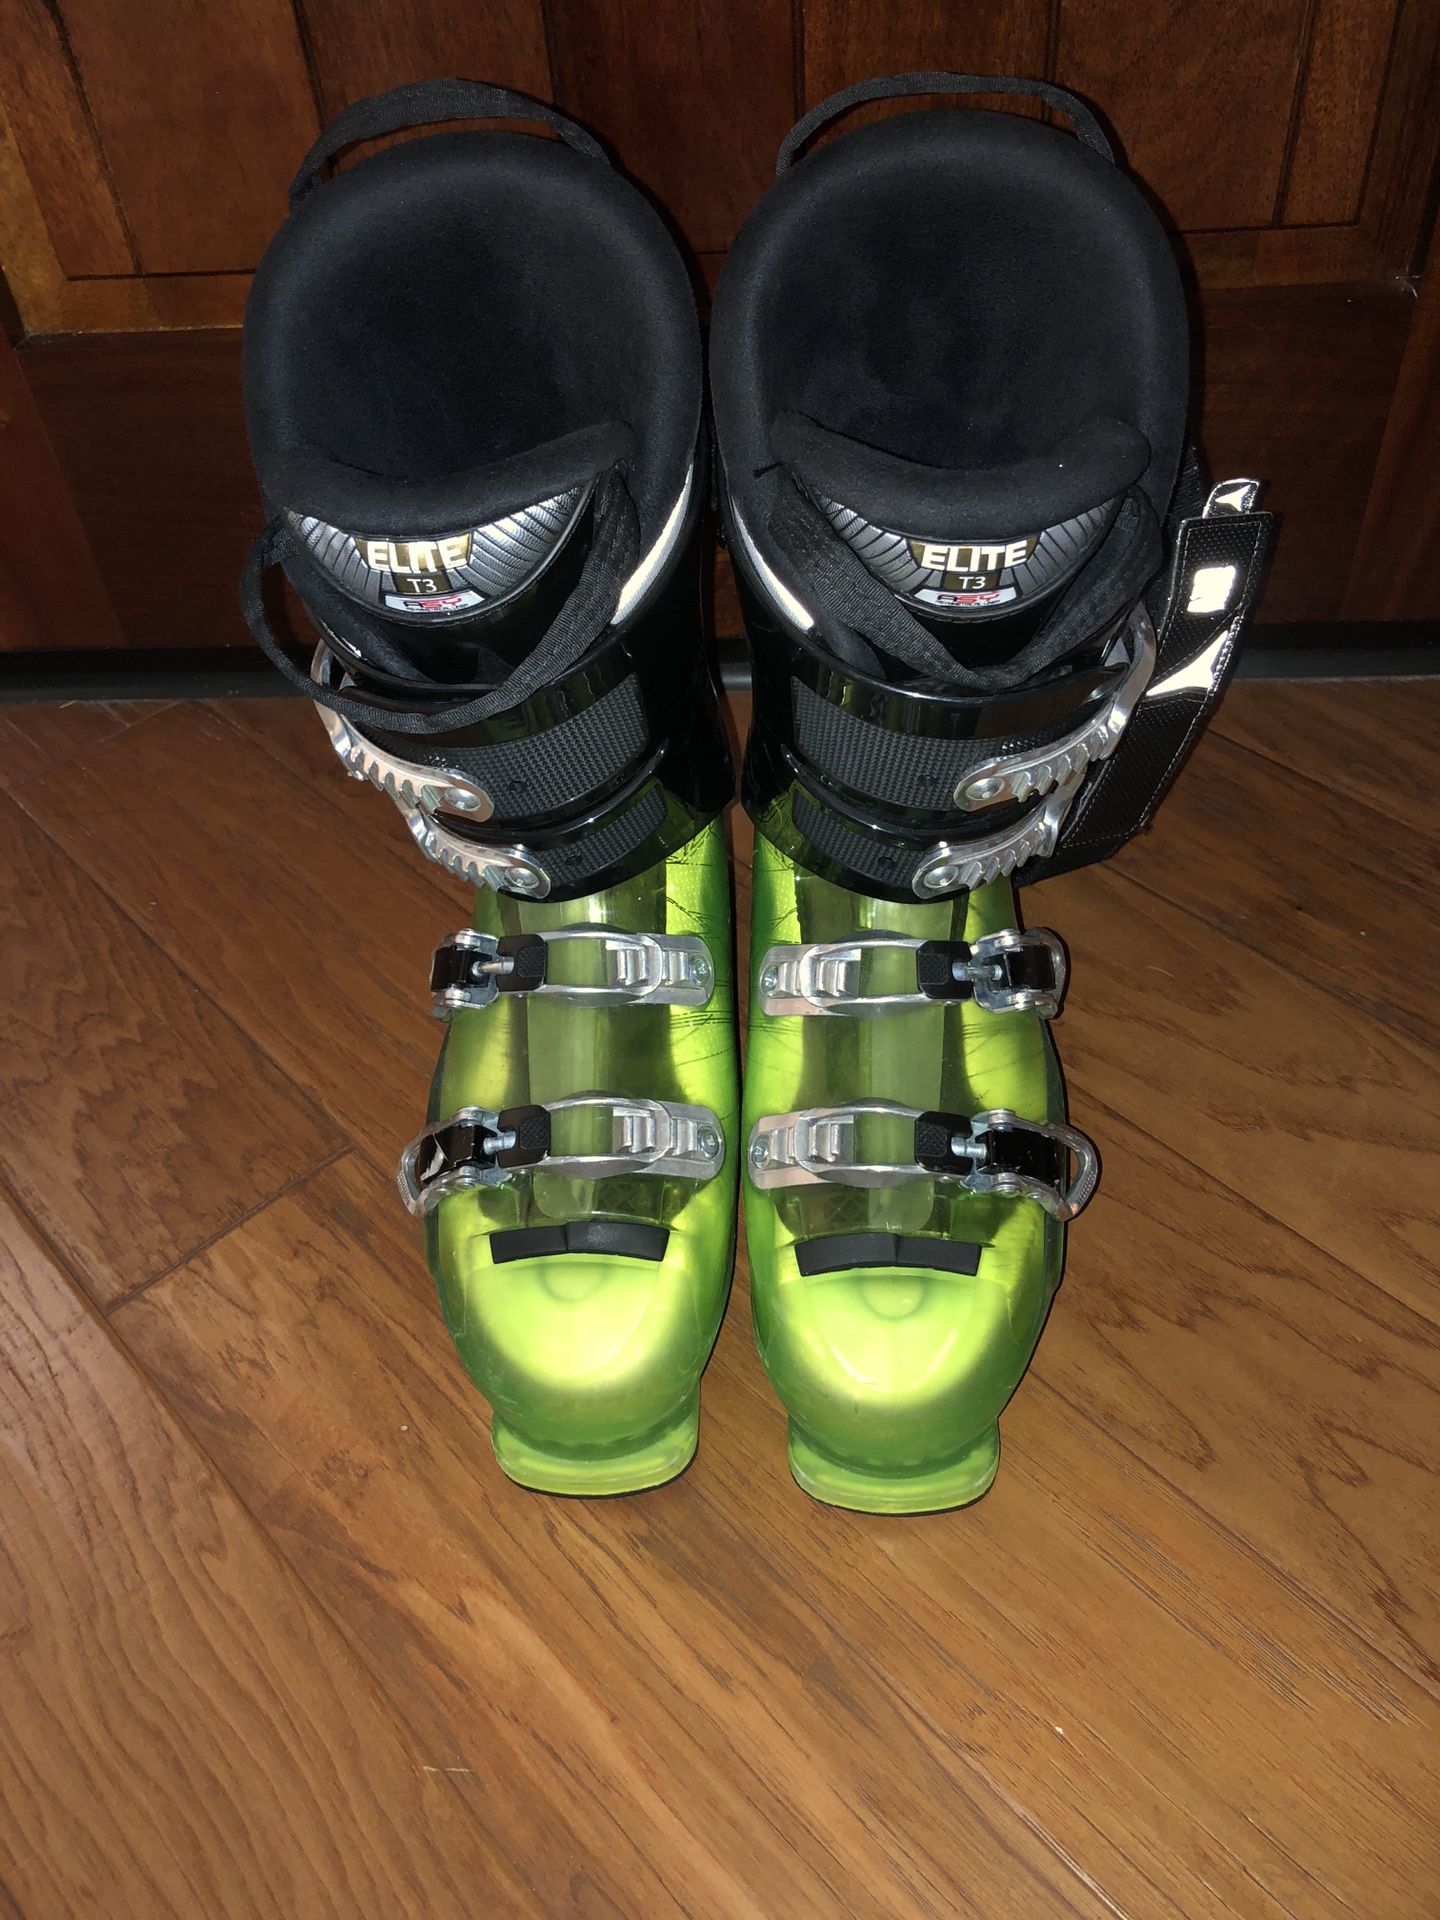 2013 Atomic Tracker 110 Alpine Touring Ski Boots - 28.0/28.5